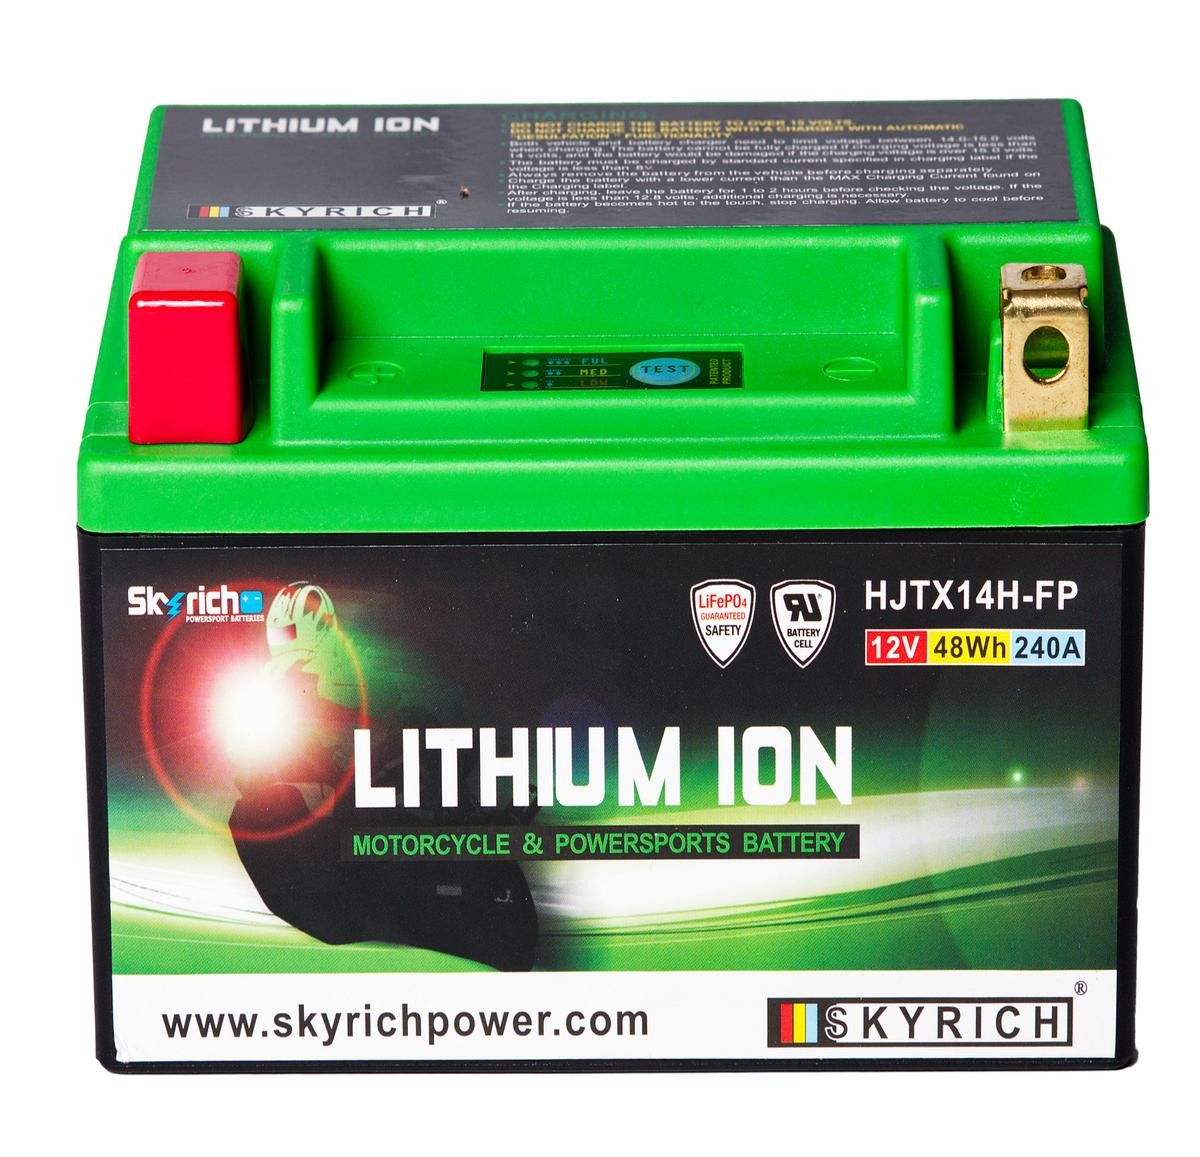 SUZUKI SV Batterie 12V 4Ah 240A N Li-Ionen-Batterie SKYRICH LITHIUM ION HJTX14H-FP